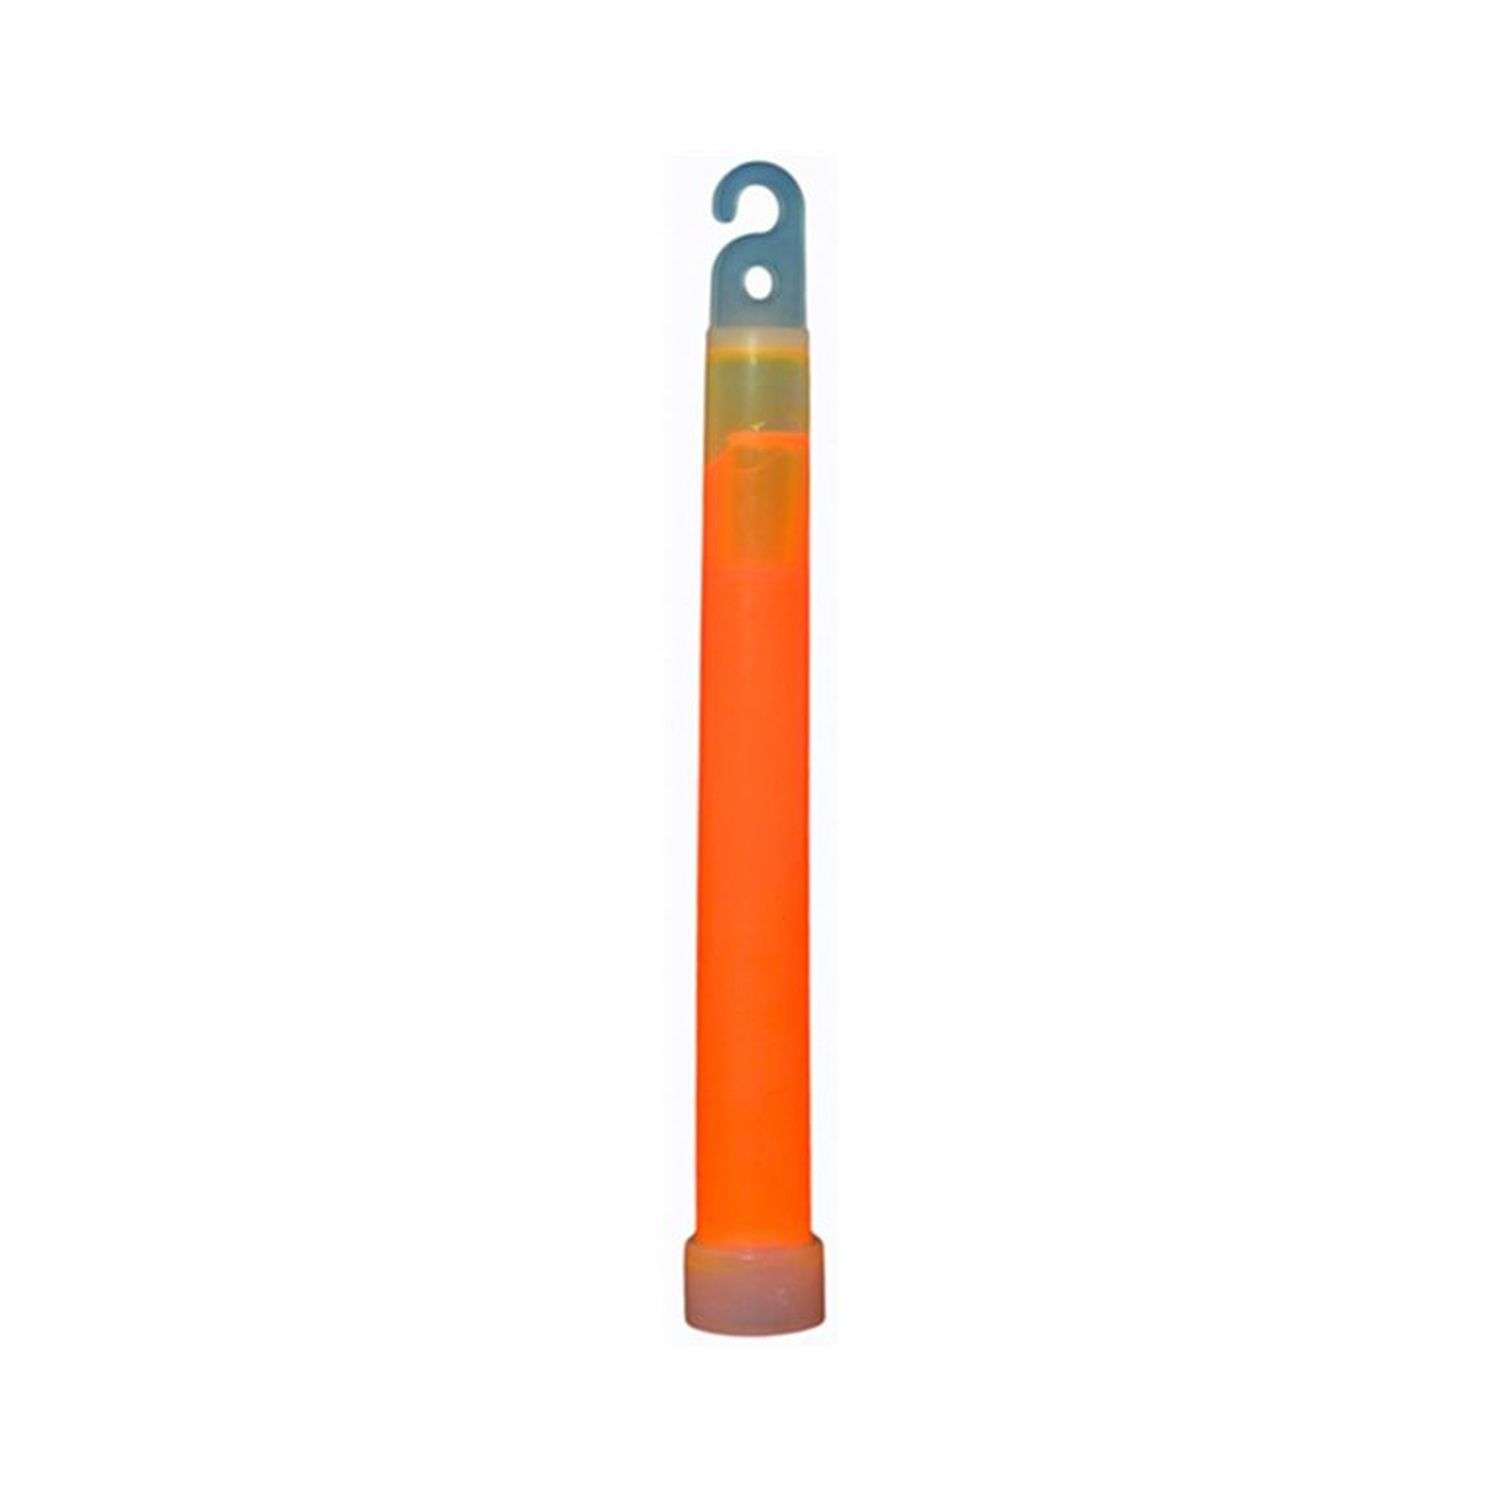 Кулон Uniglodis Светящийся Glow Stick 4 см оранжевый 05407330 - фото 1